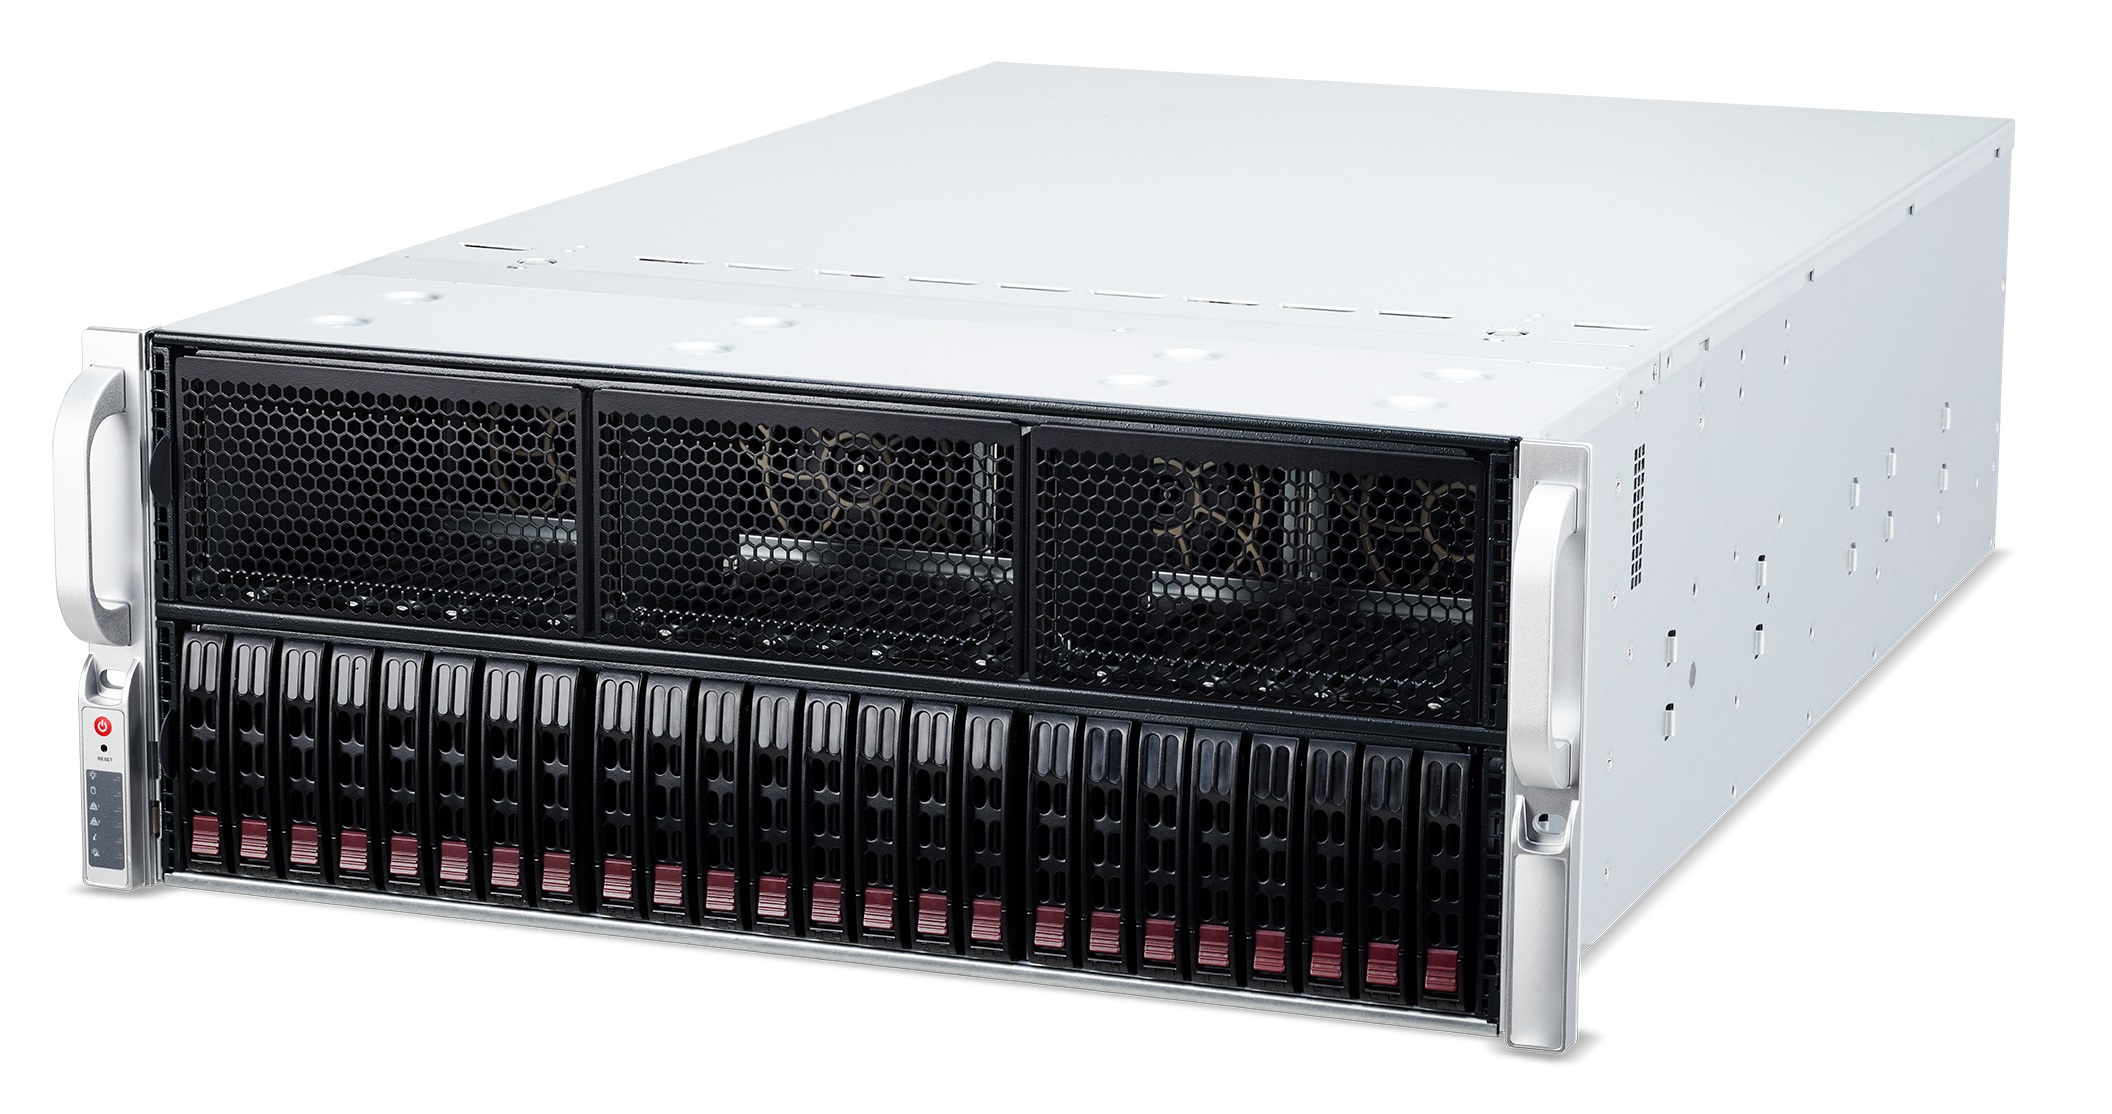 Altos Computing เปิดตัวเซิฟเวอร์ Altos BrainSphere R685 F5 ขับเคลื่อนด้วยพลัง NVIDIA RTX A6000 GPU รองรับการทำงาน AI/Deep Learning คอมพิวติ้งเวิร์กโหลดขนาดใหญ่ ได้อย่างปลอดภัยและมีประสิทธิภาพ